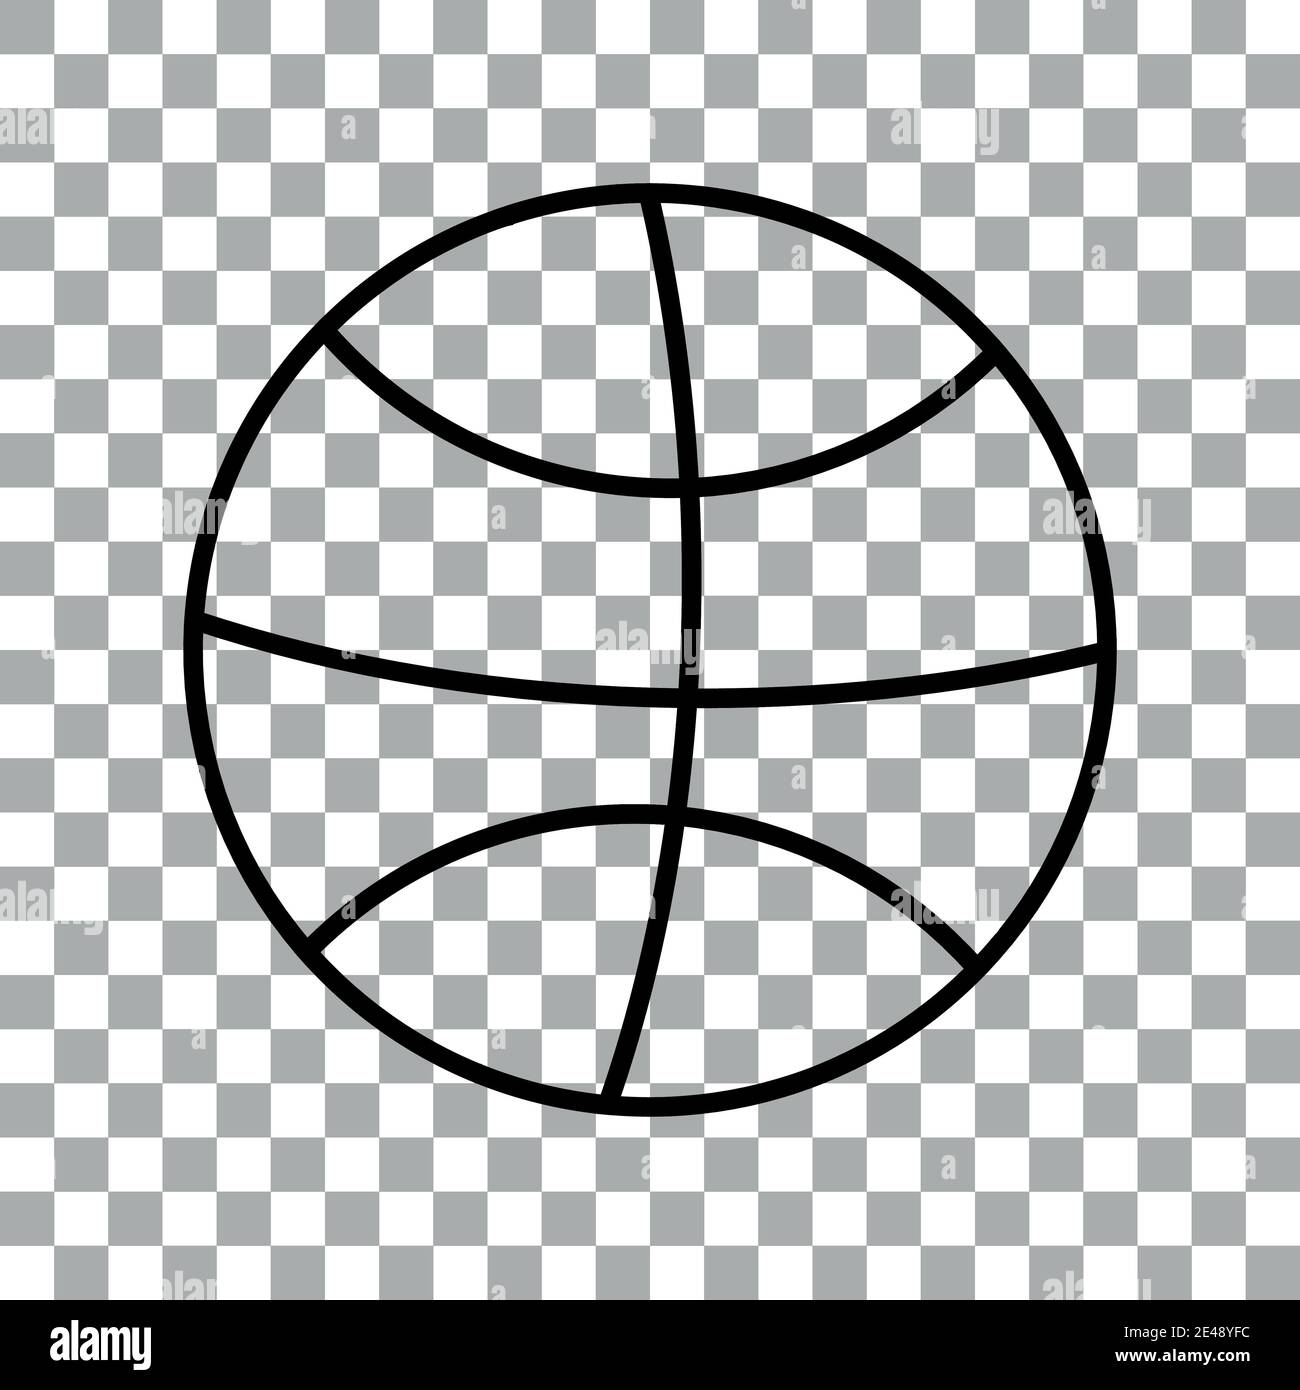 Bastekball Ball Icon transparente, isolierte schwarze Linien Stock Vektor